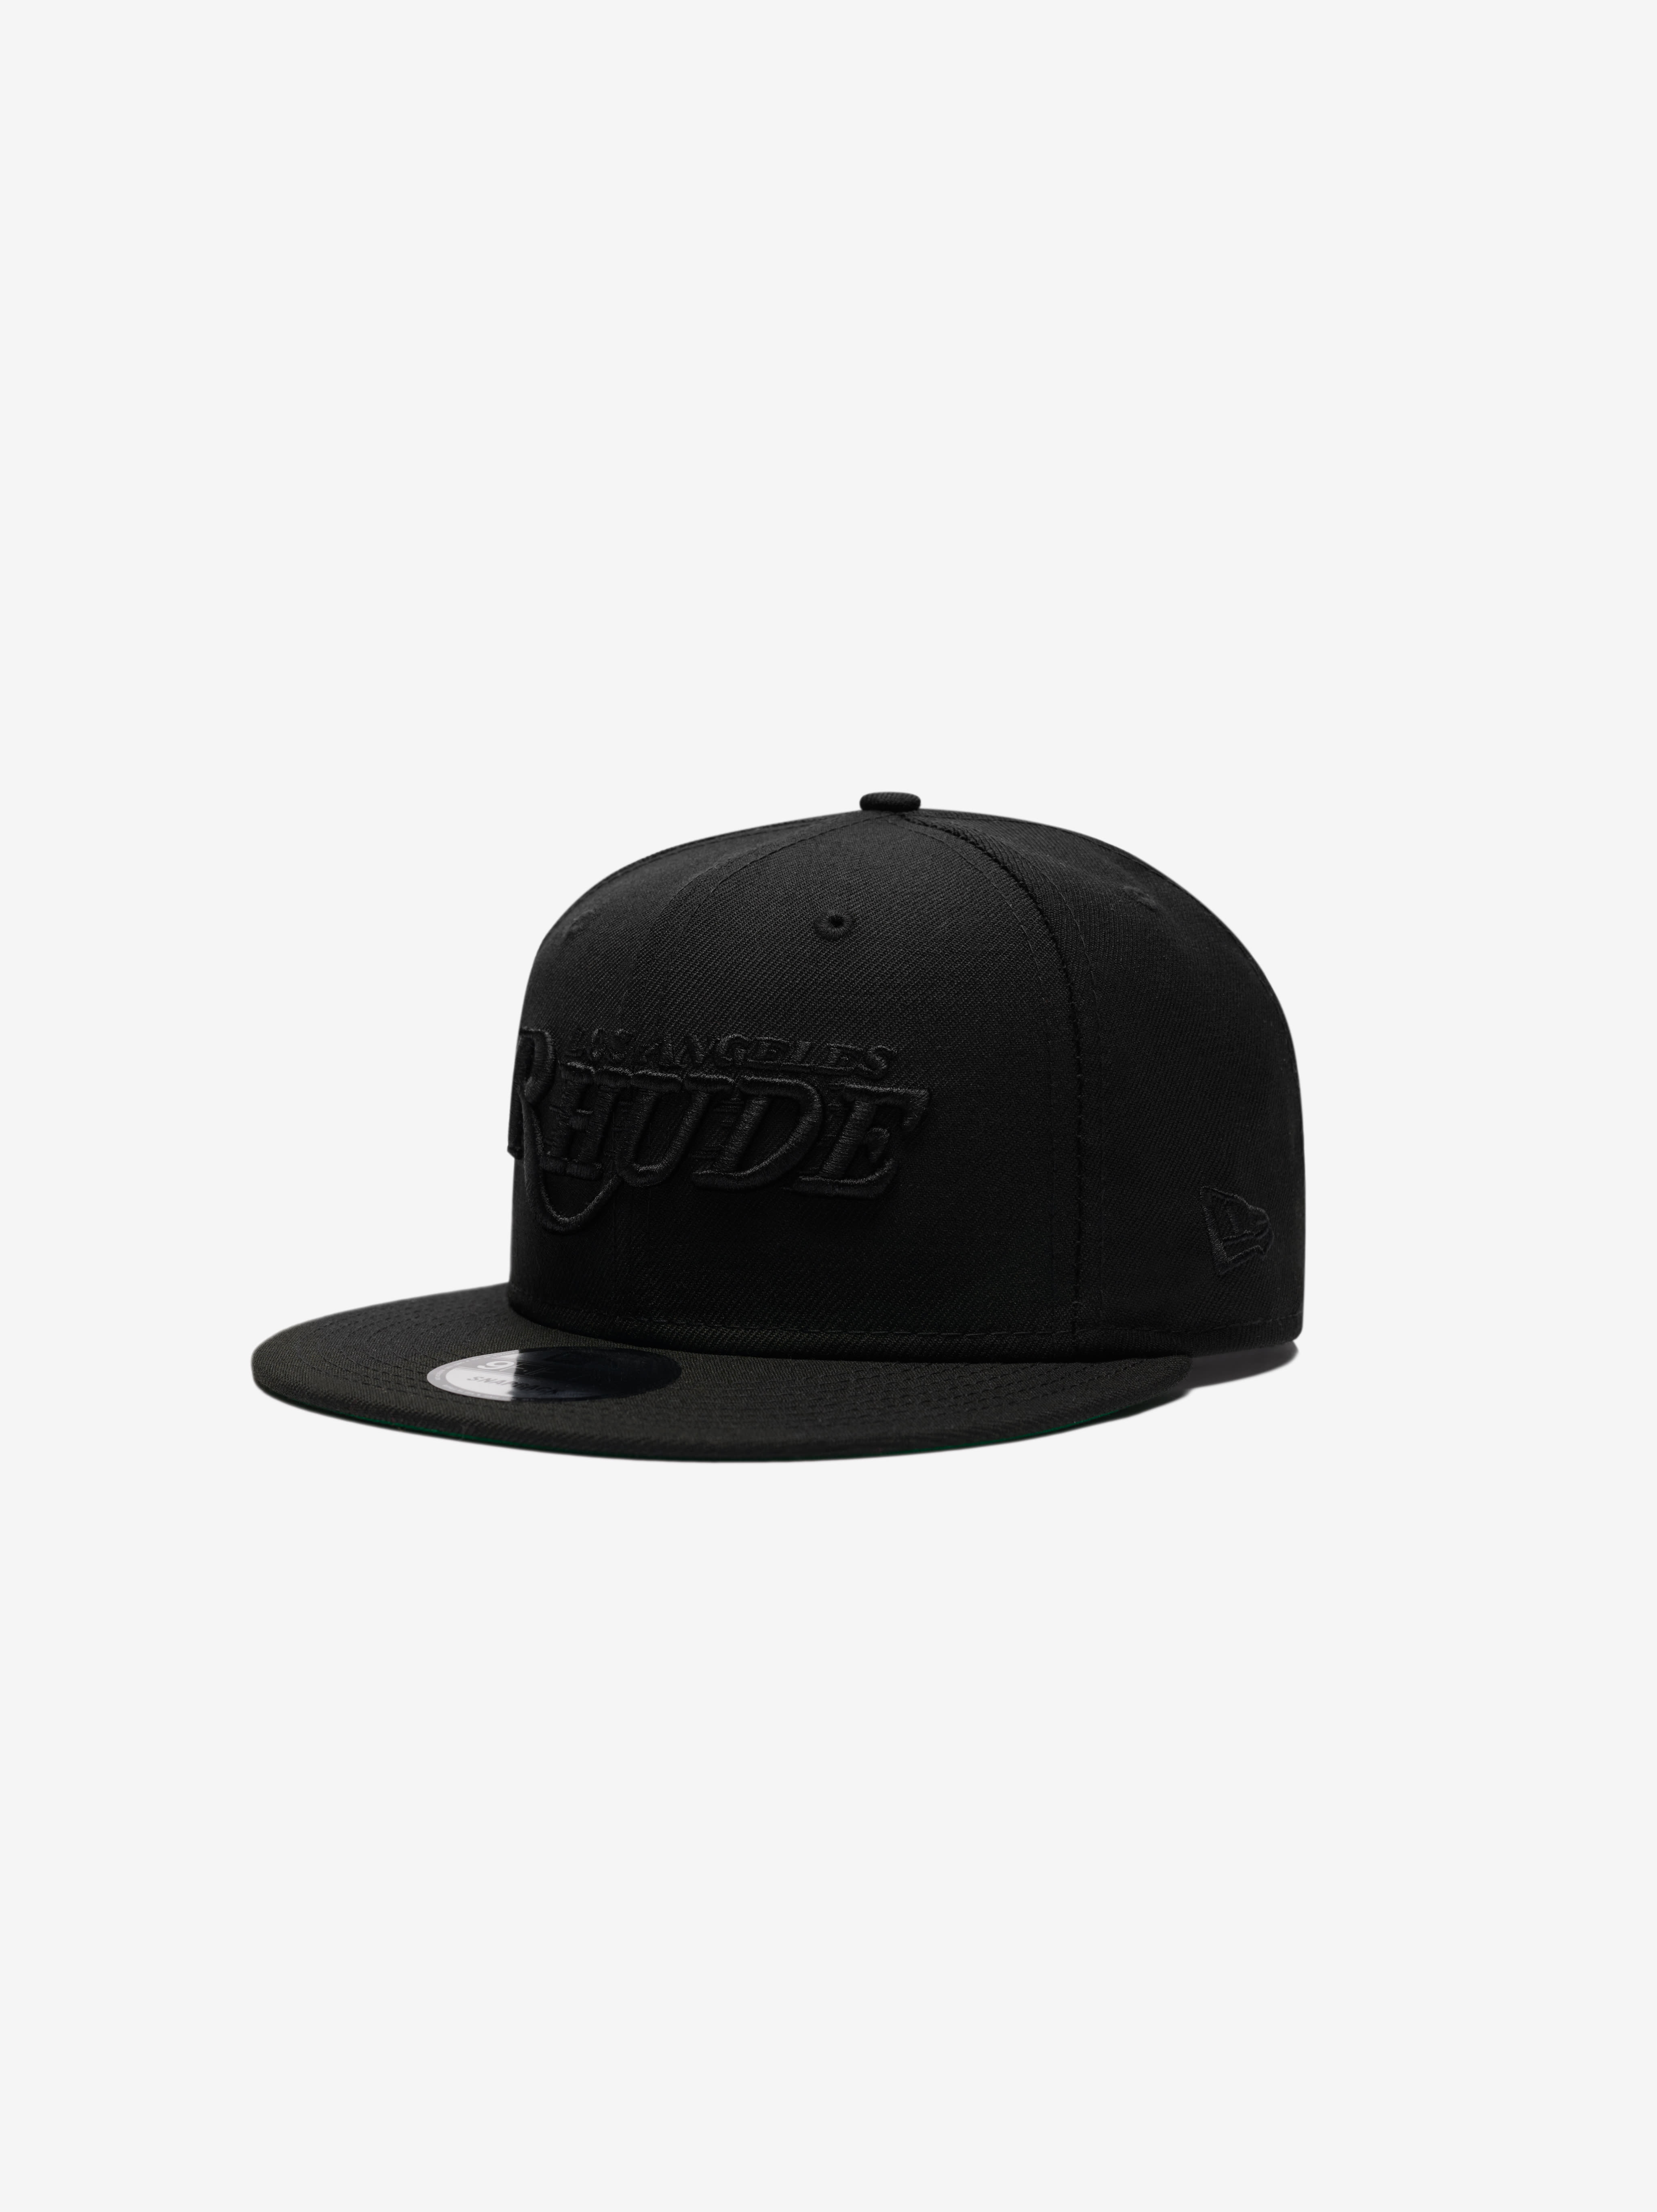 rhude-all-black-lakers-hat